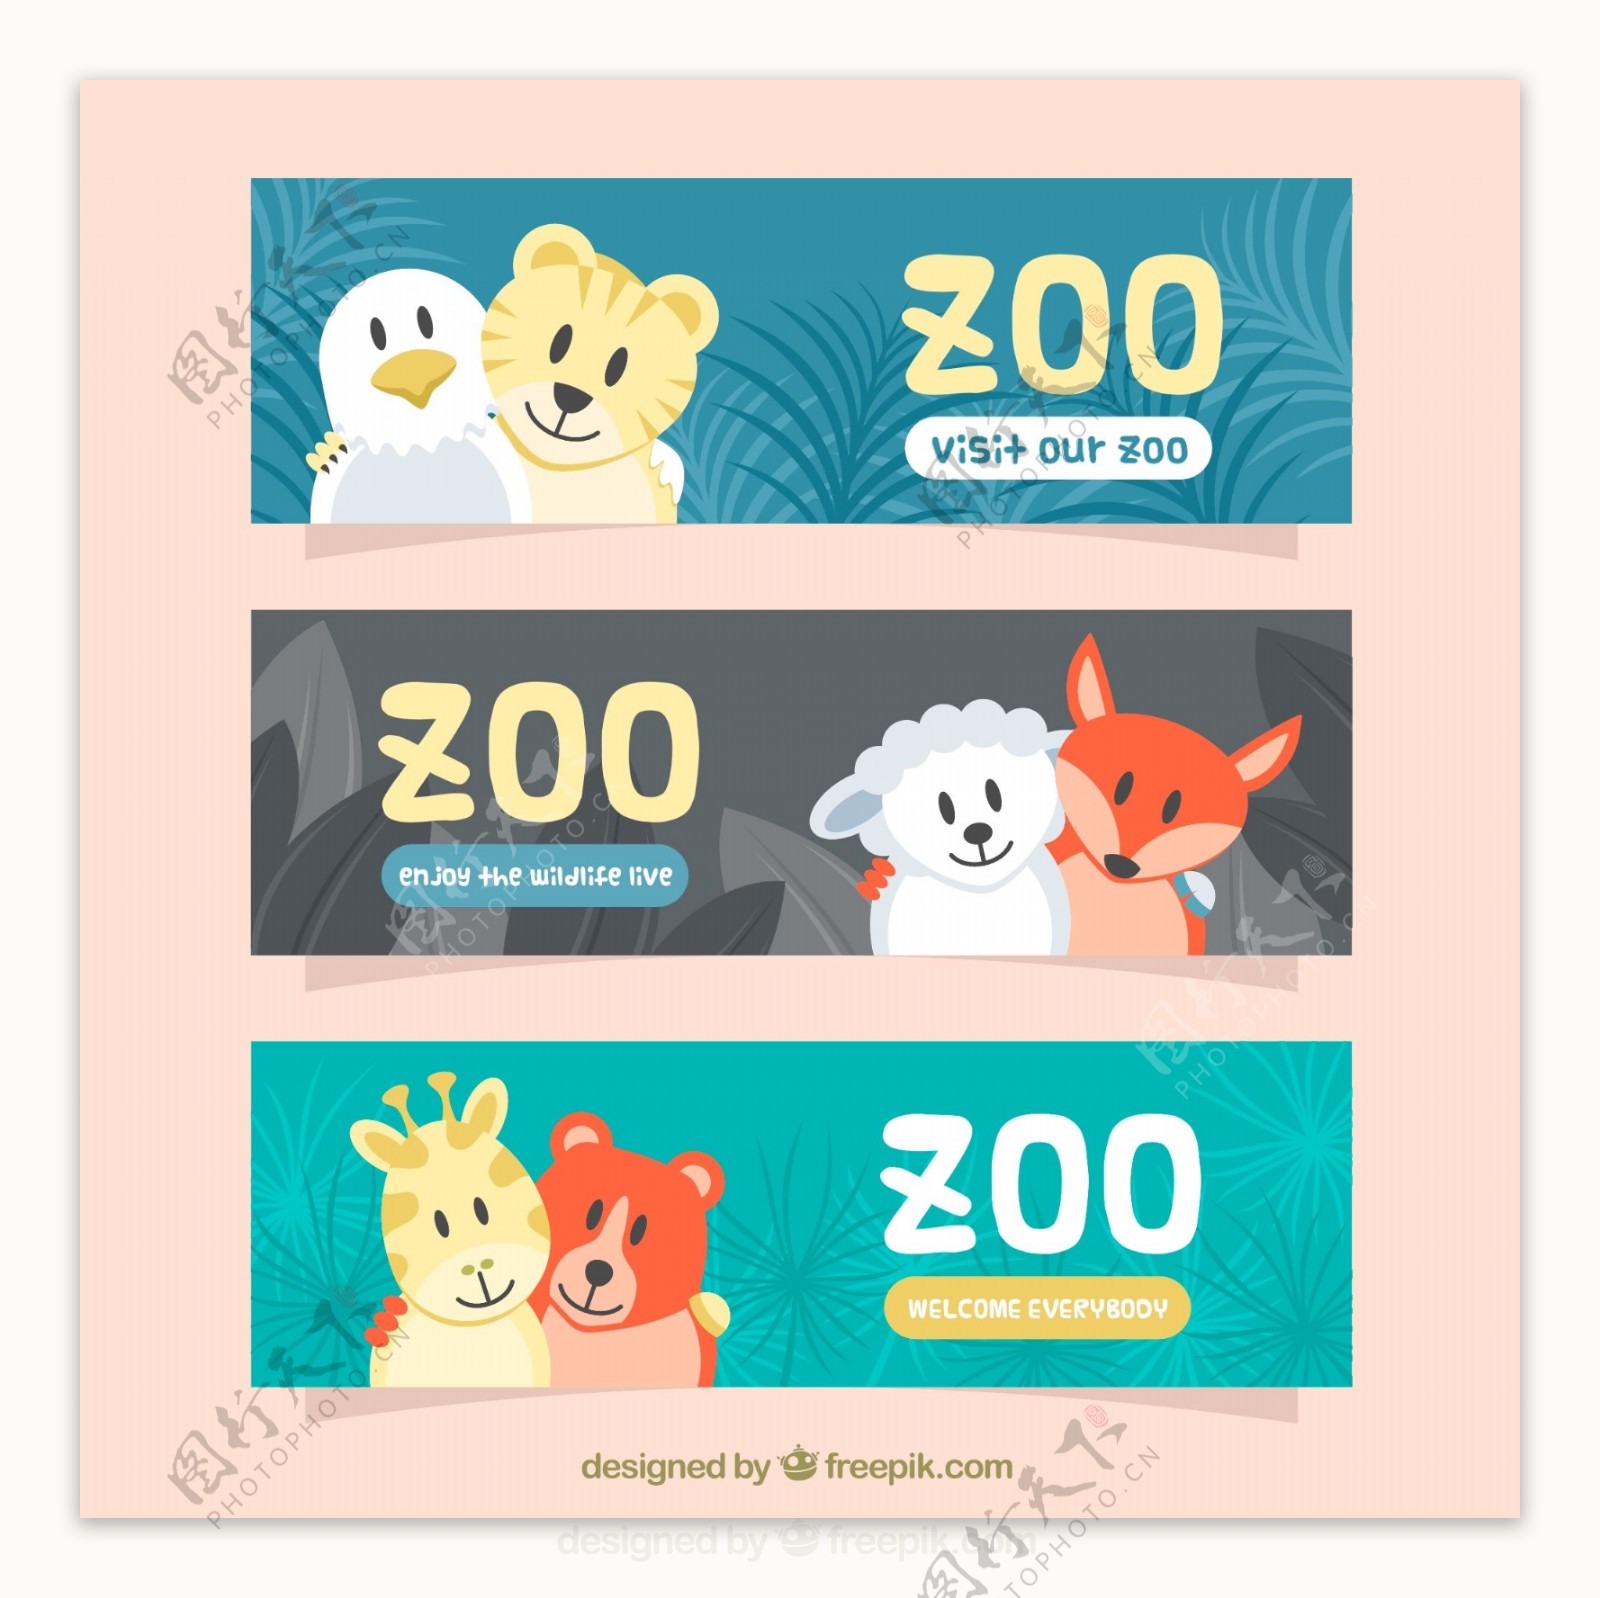 3款可爱动物好朋友设计动物园banner矢量图